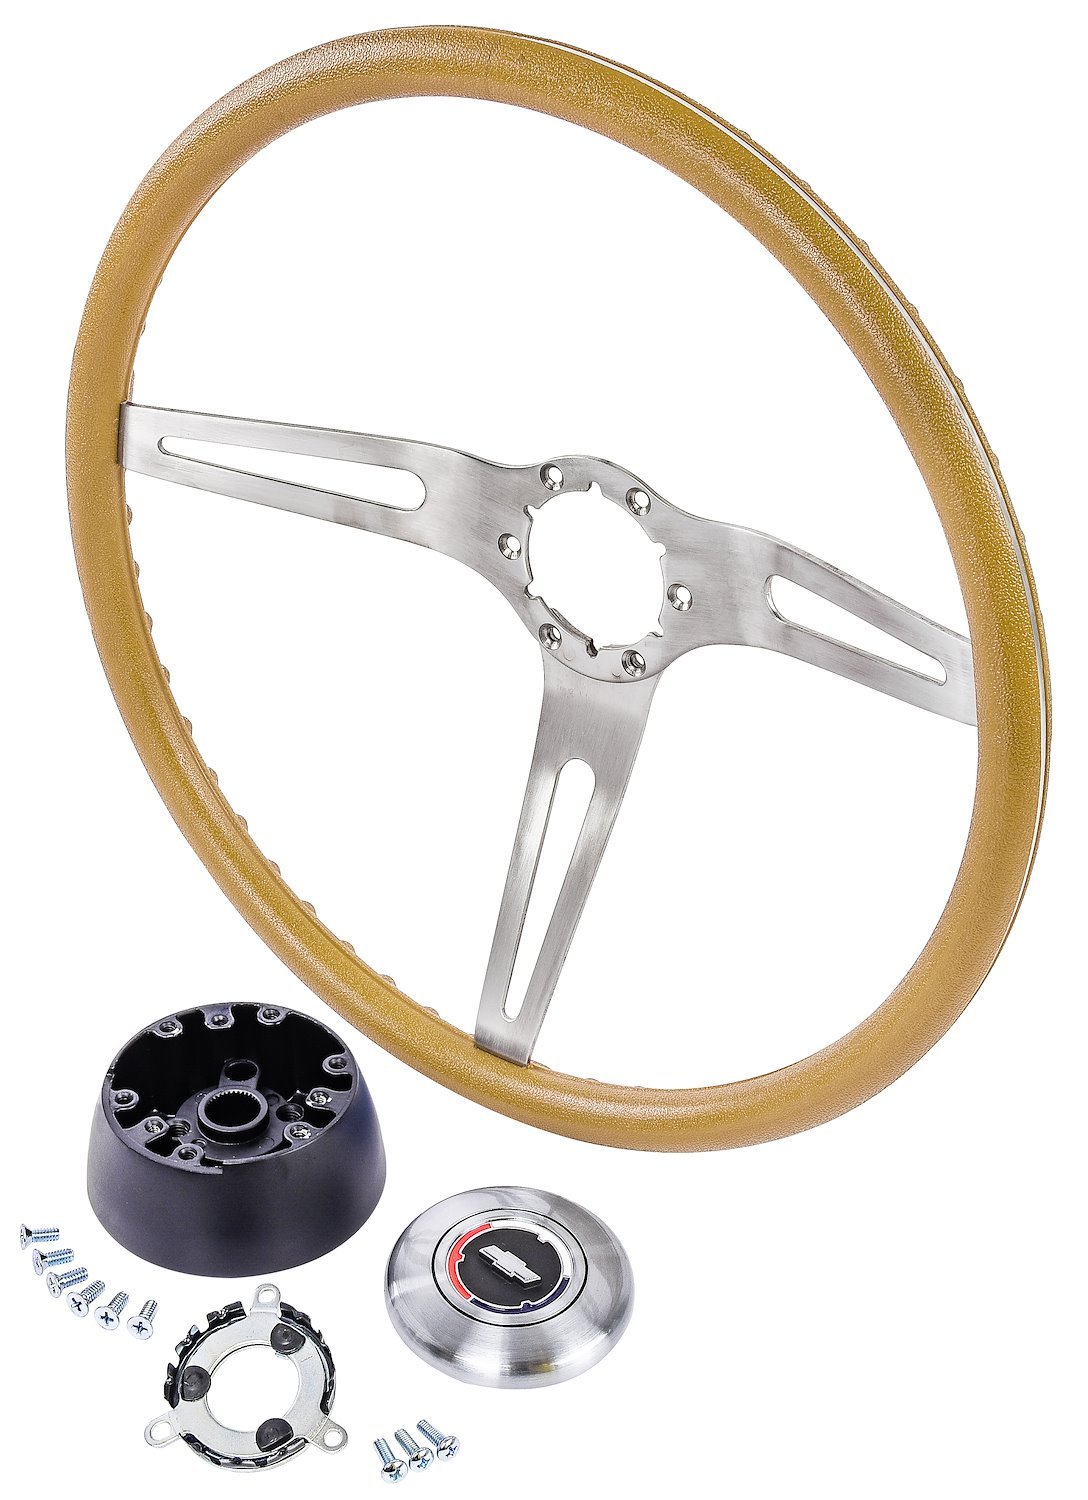 3-Spoke Comfort Grip Steering Wheel Kit Fits Select 1967-1969 Chevrolet Cars & 1960-1975 Chevrolet & GMC Trucks [Saddle Grip]